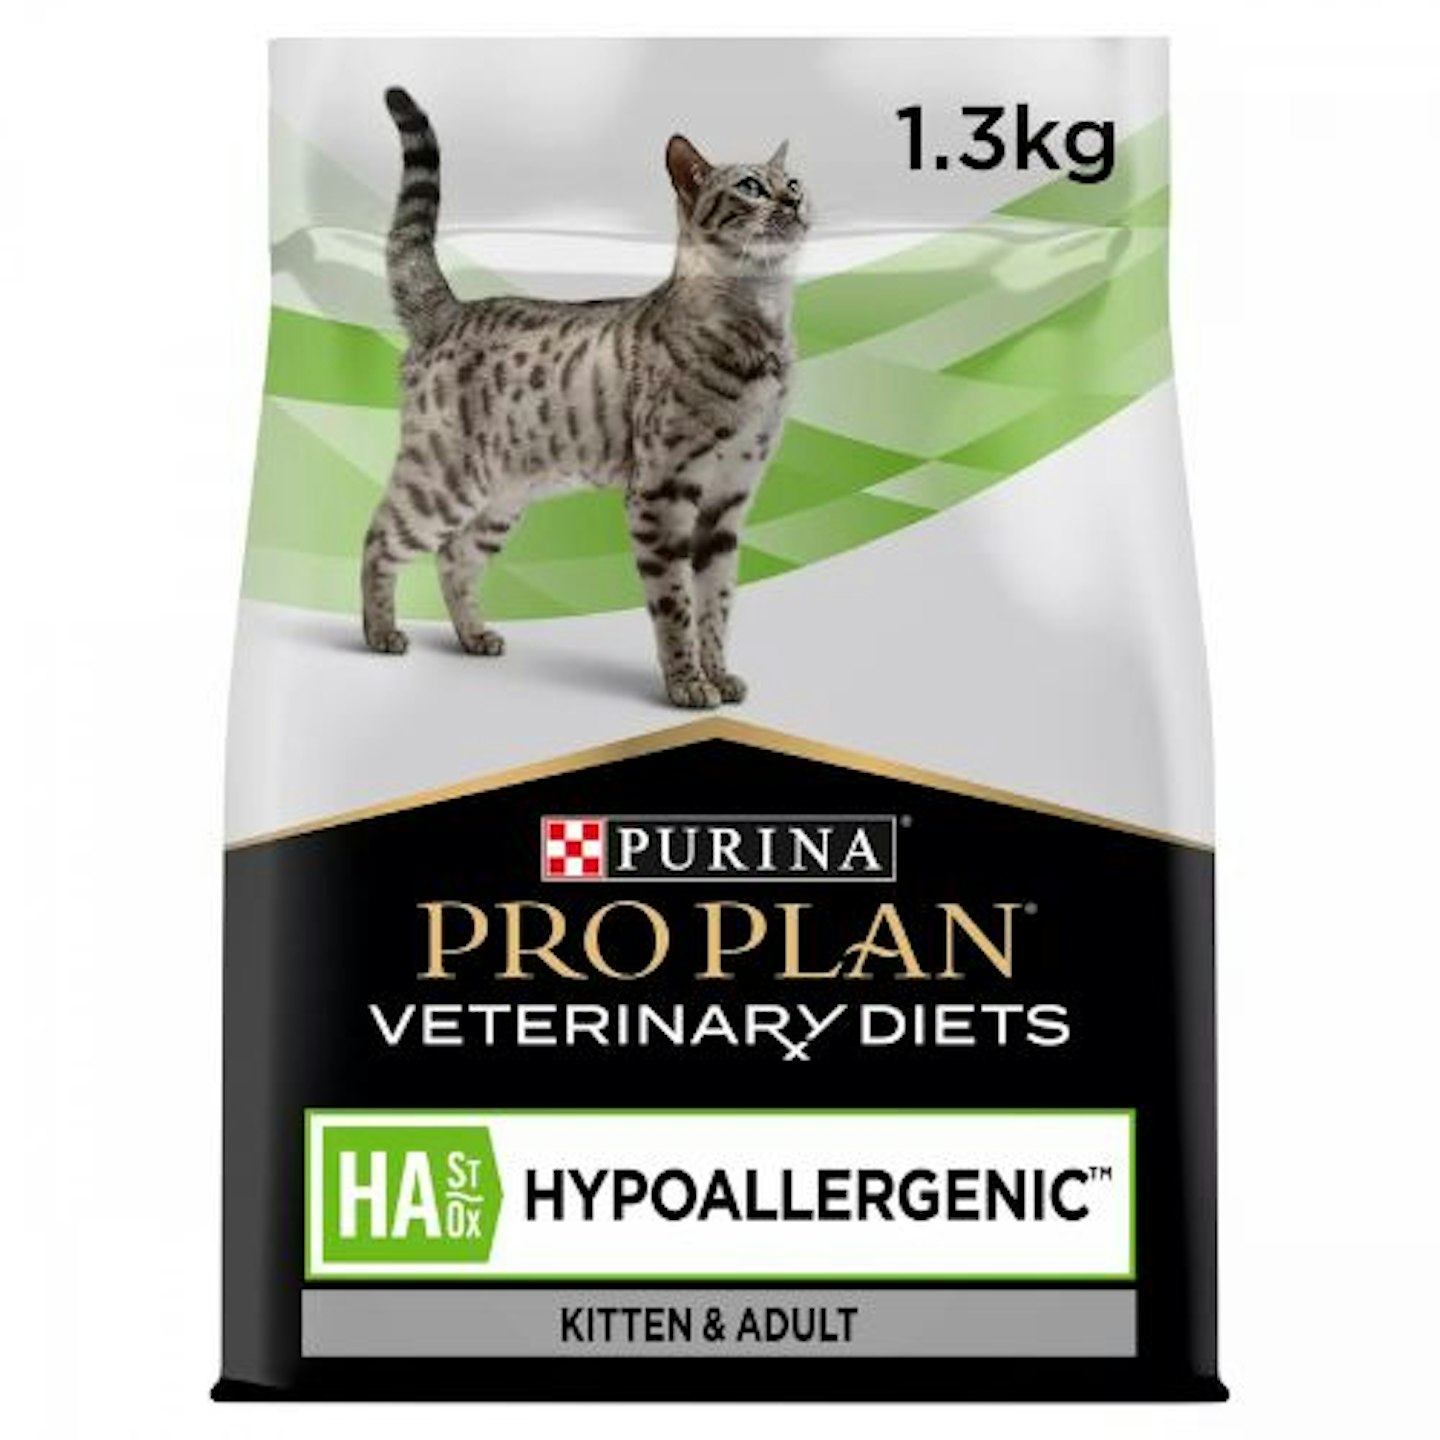 Pro Plan Veterinary Diets Hypoallergenic Dry Cat Food